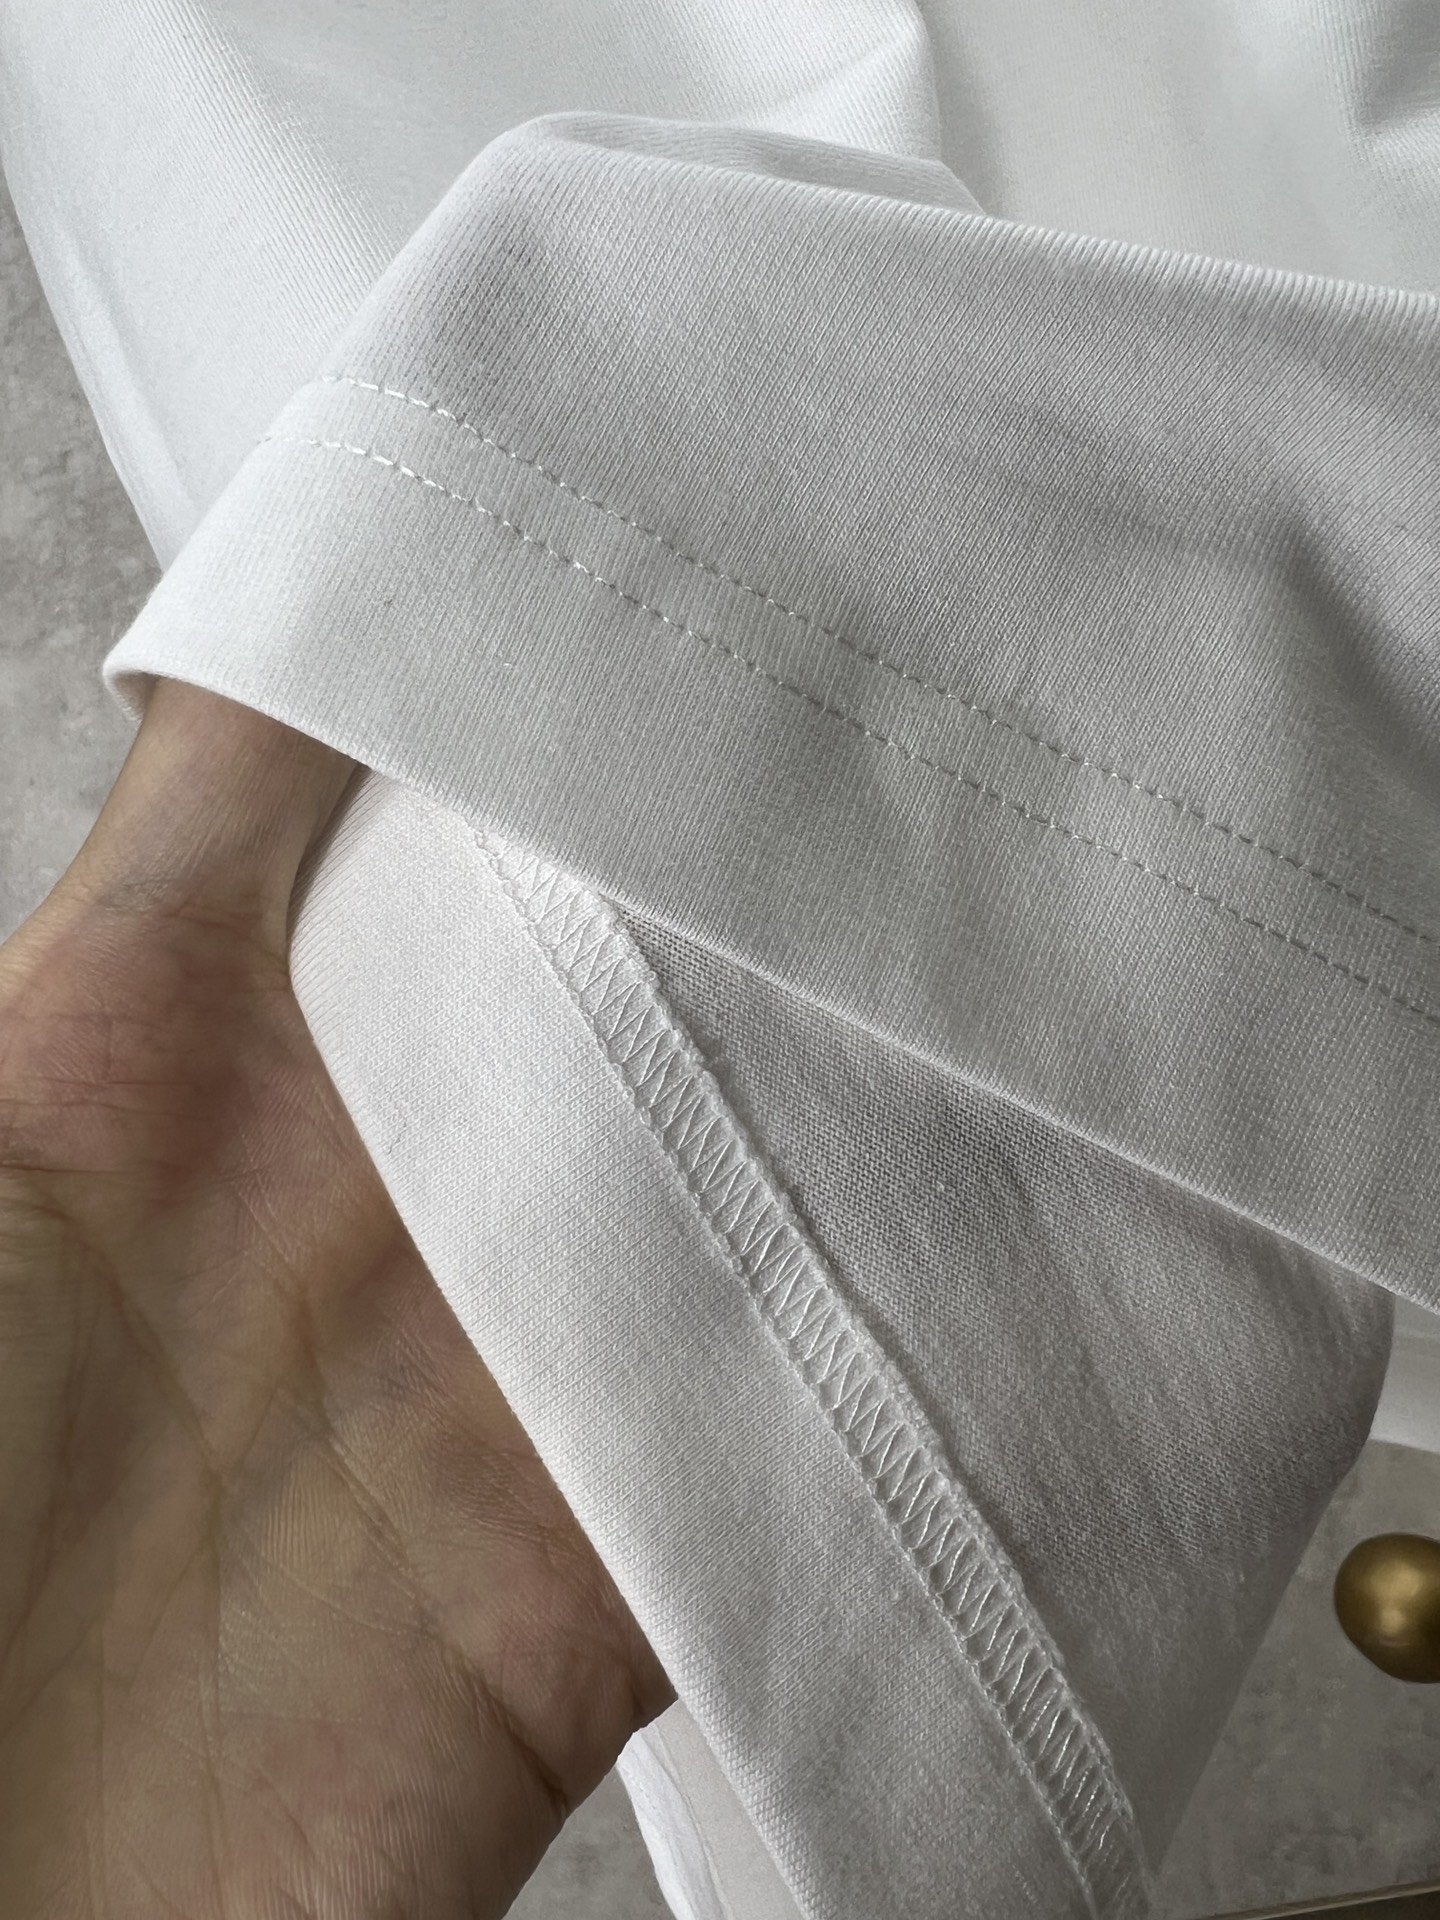 DG2024Ss最新款短袖T恤原标定制面料手感柔软穿着舒适做工精细.上身效果无敌帅气L码数S-2xl